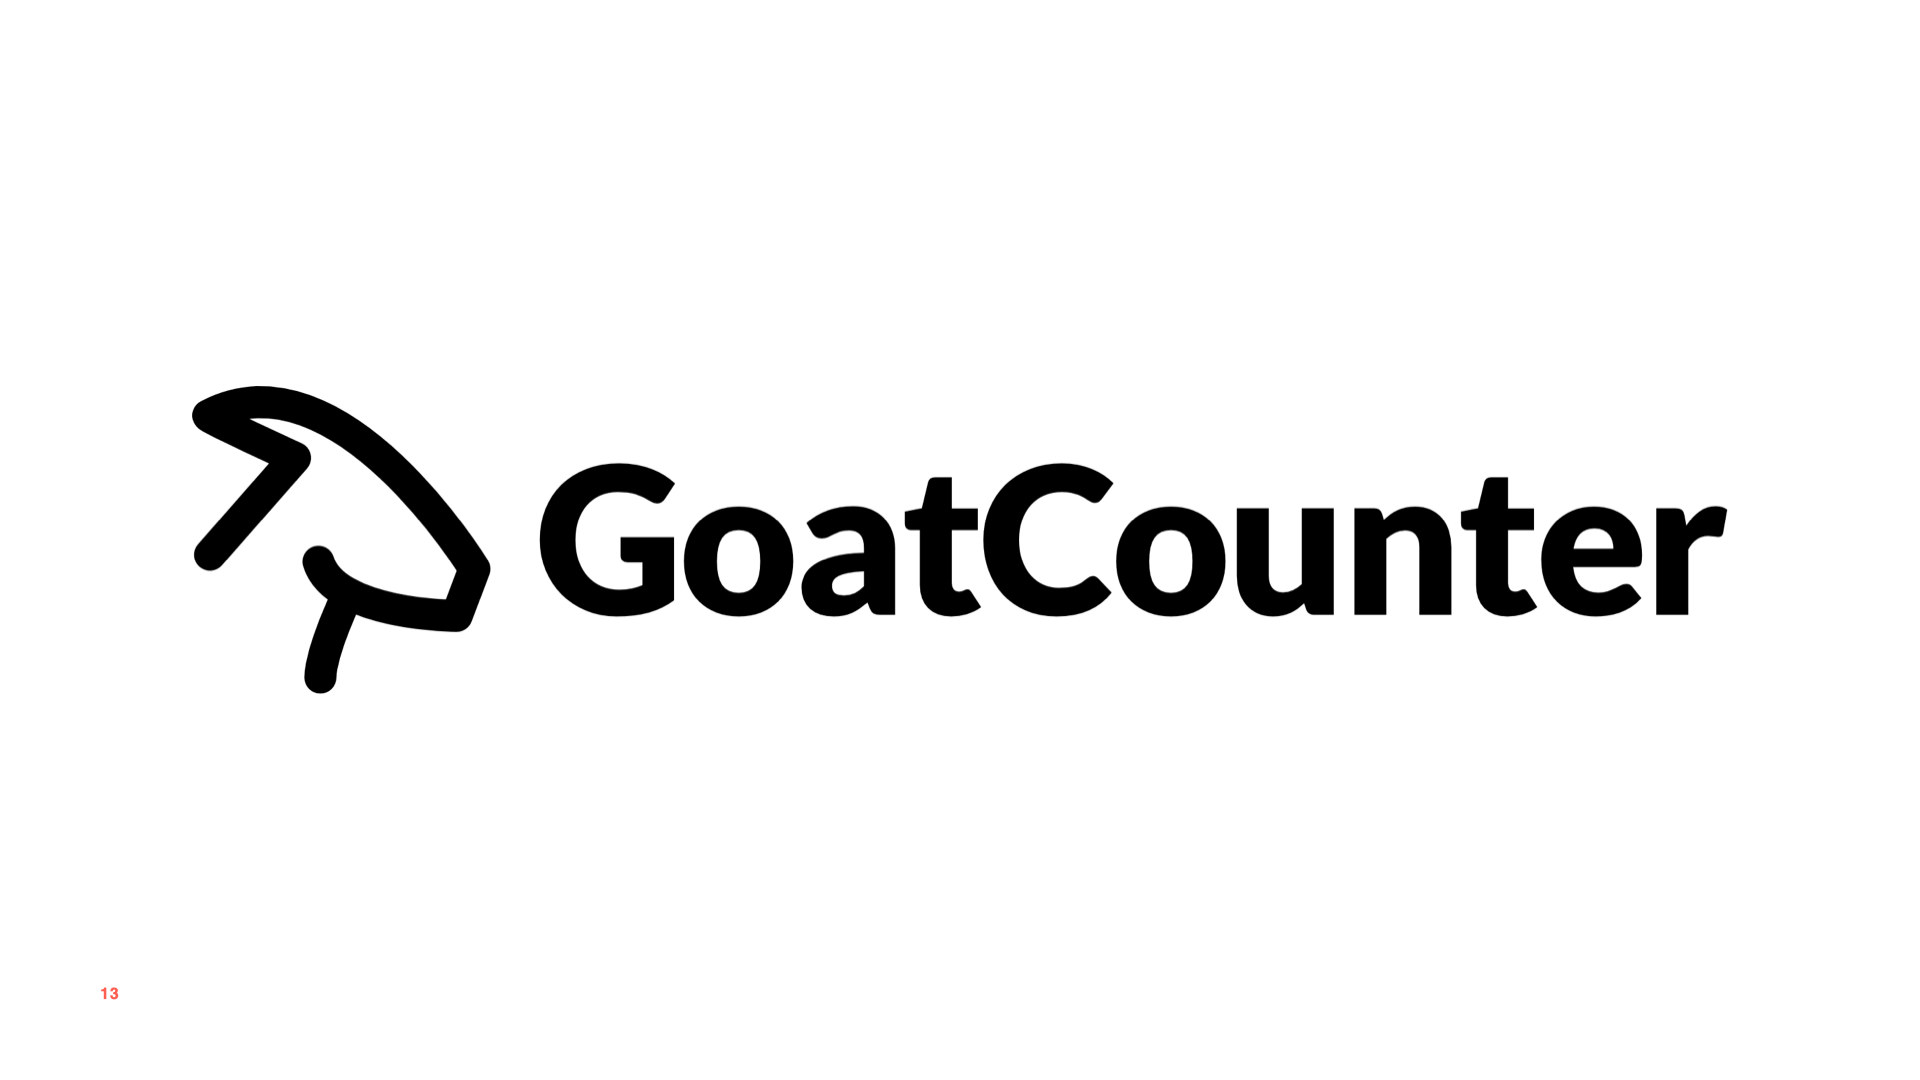 Goat Counter new logo